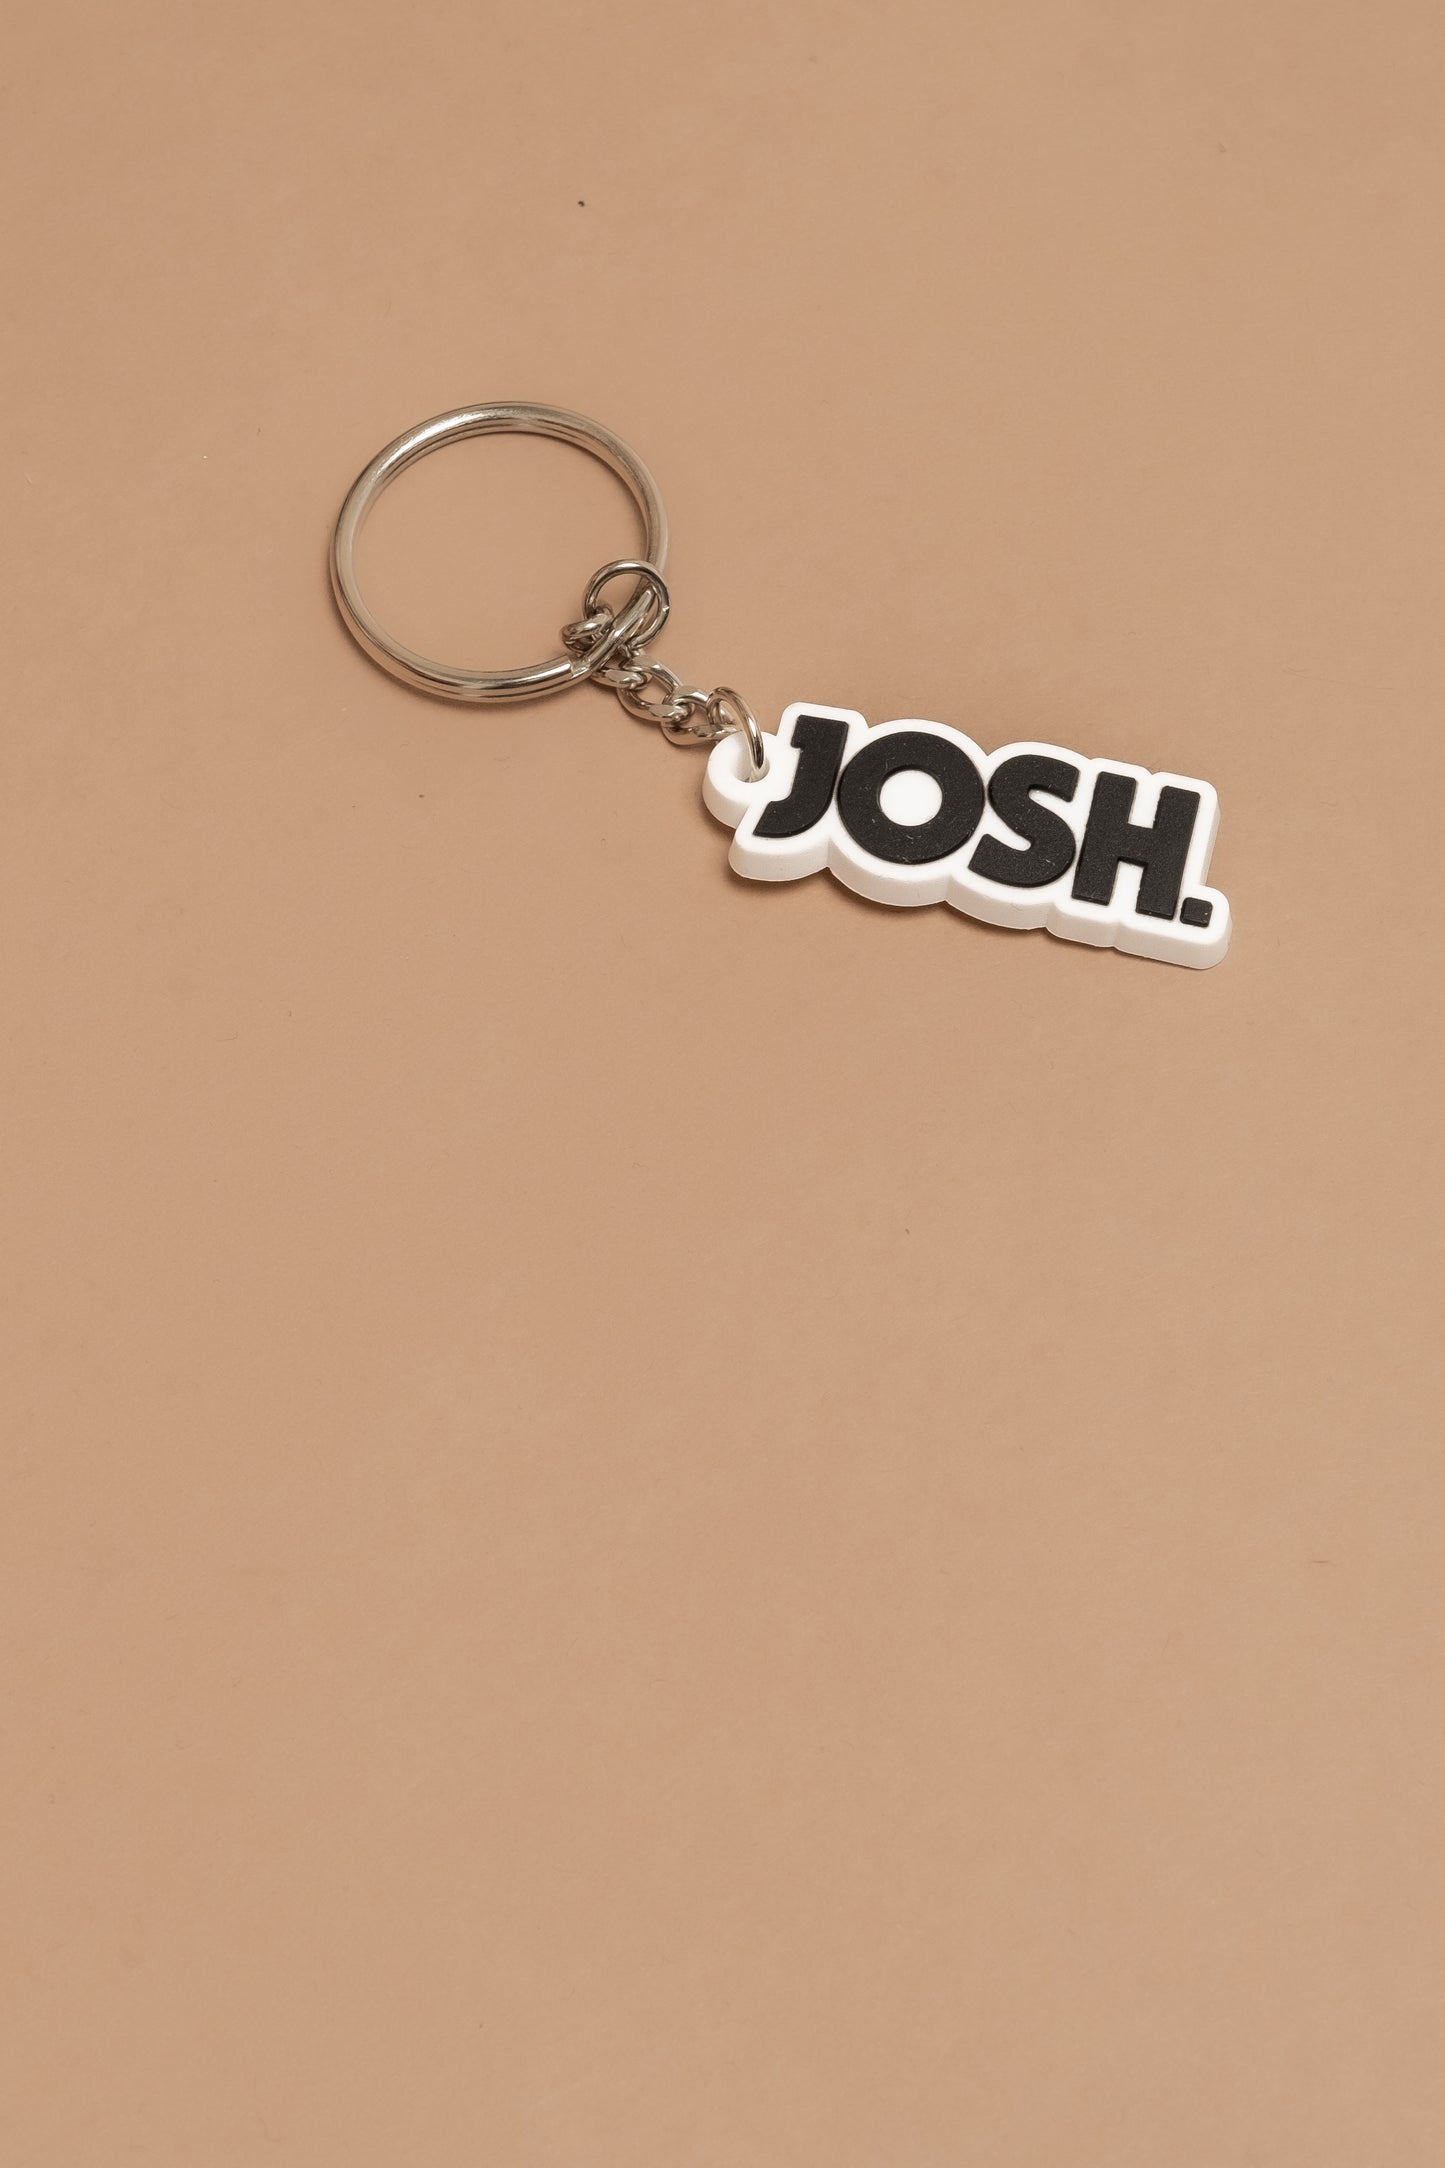 JOSH. Schlüsselanhänger "Josh."